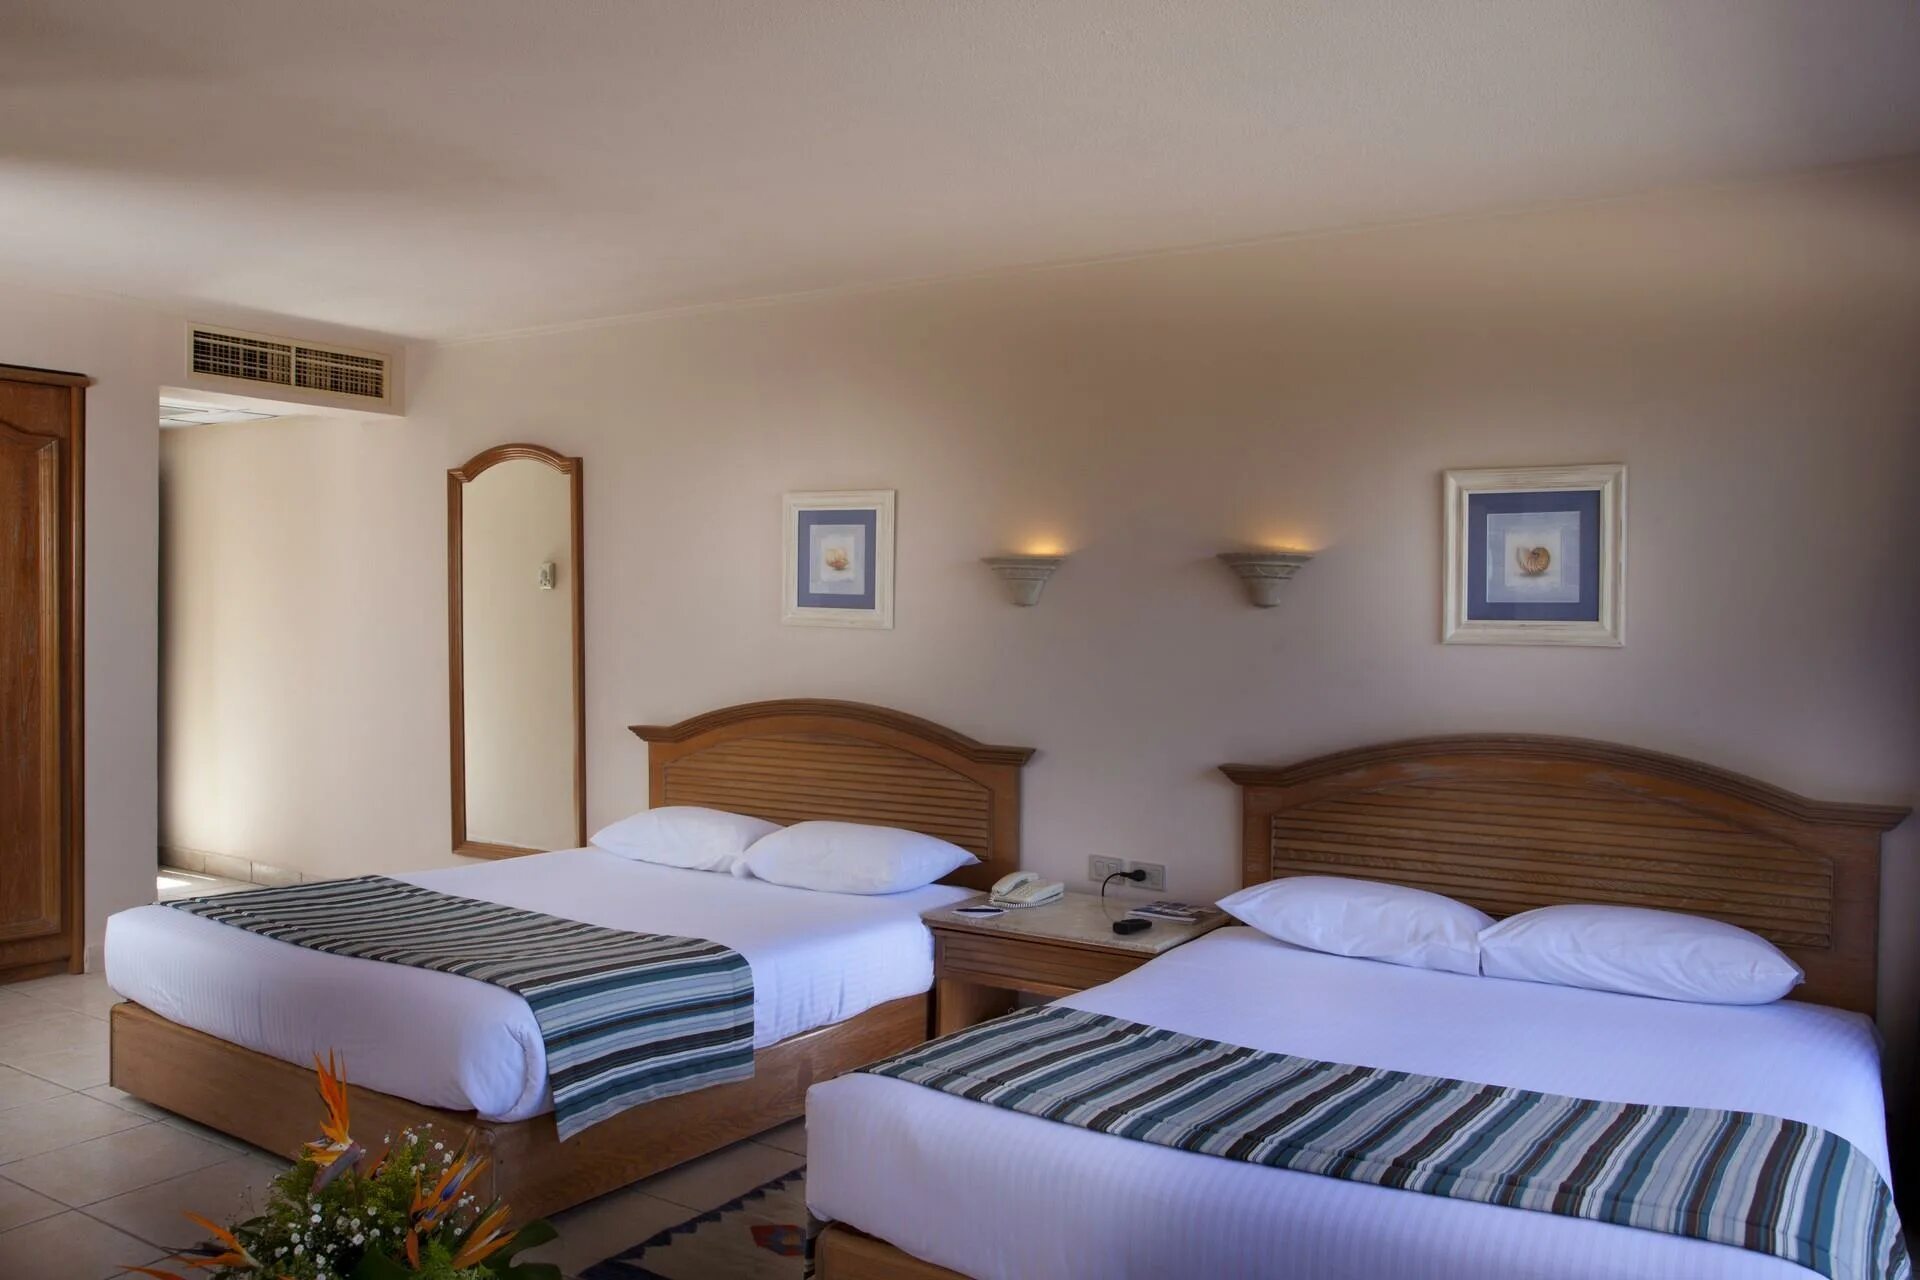 Coral rotana resort. Отель Coral Beach Hotel Hurghada. Корал Бич Хургада. Coral Beach Hotel Hurghada 4. Египет Хургада отель Корал Бич Резорт 4 звезды.